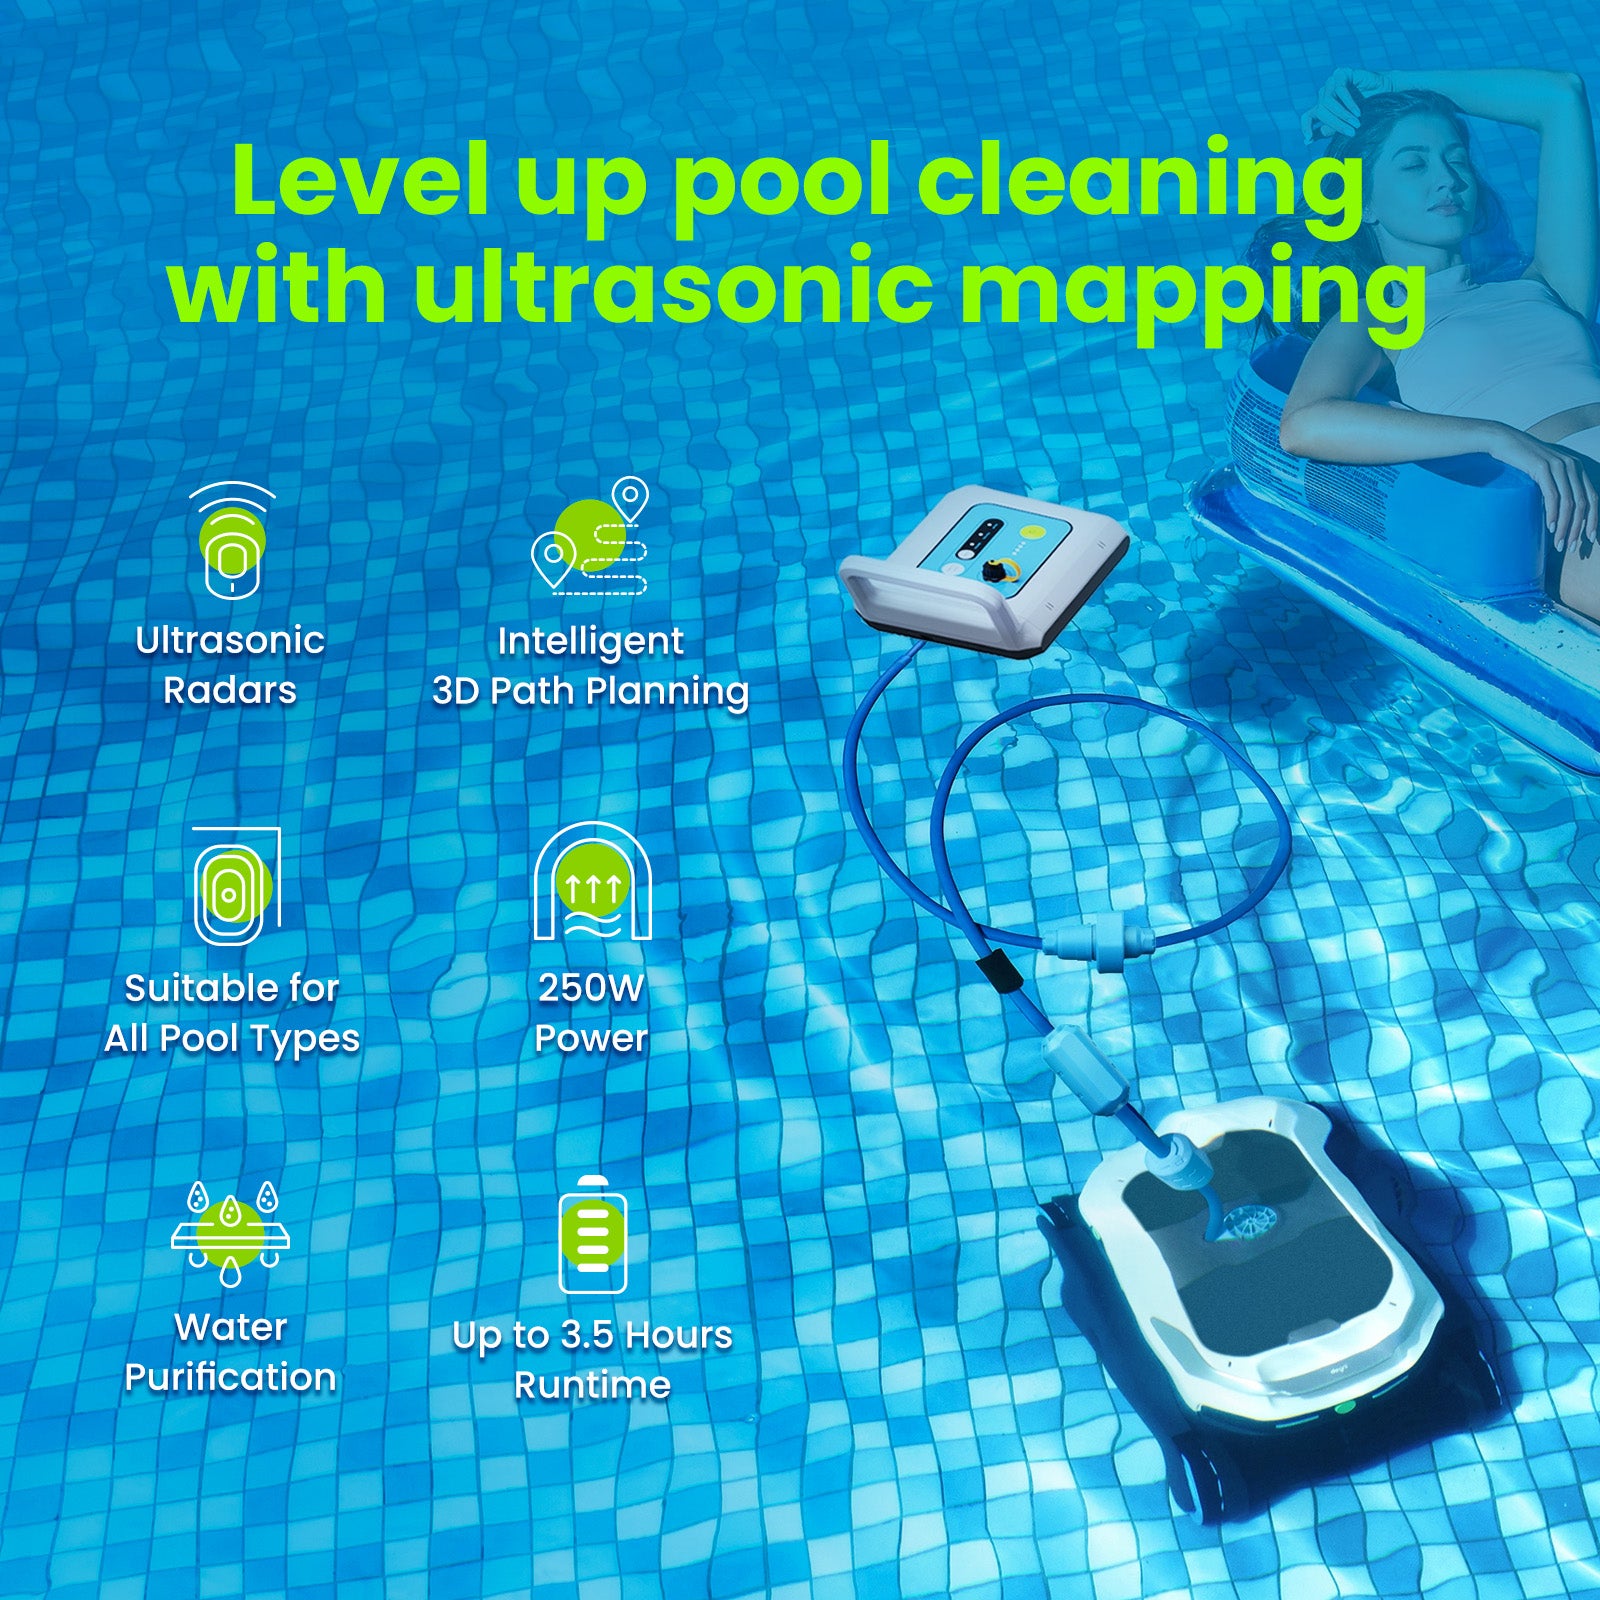 Degrii Zima Pro Ultrasonic Radar Cordless Robotic Pool Cleaner